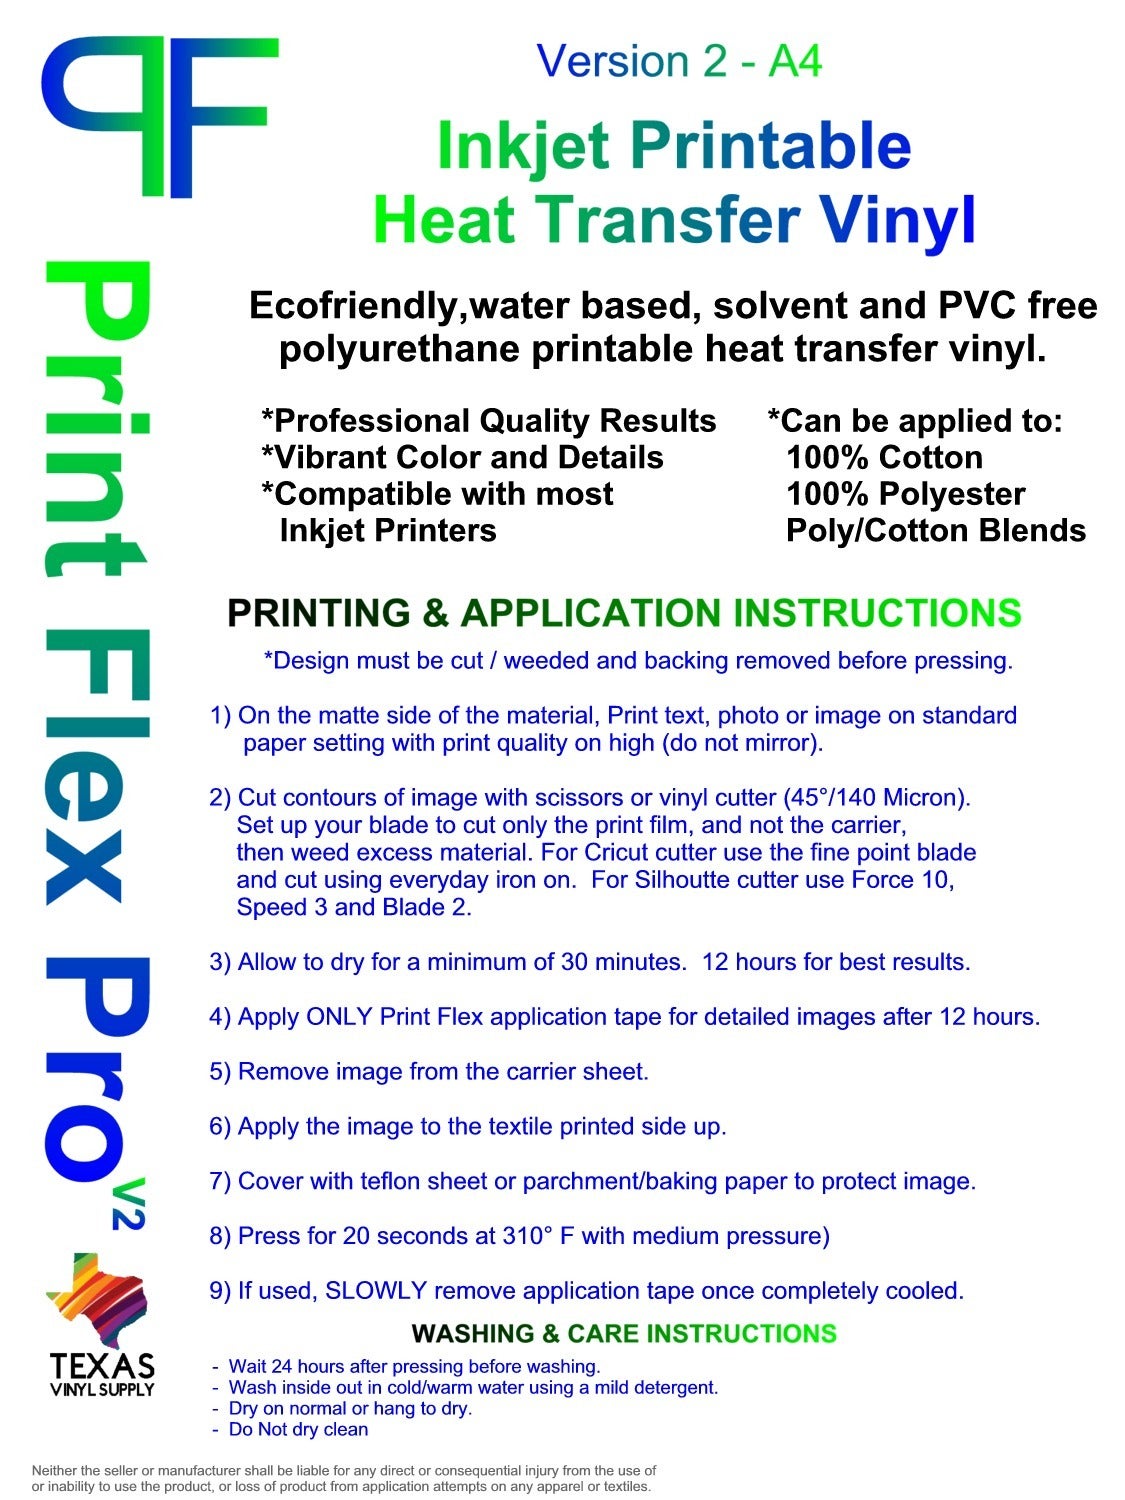 Print Flex Pro V2, Inkjet Printable Heat Transfer Vinyl